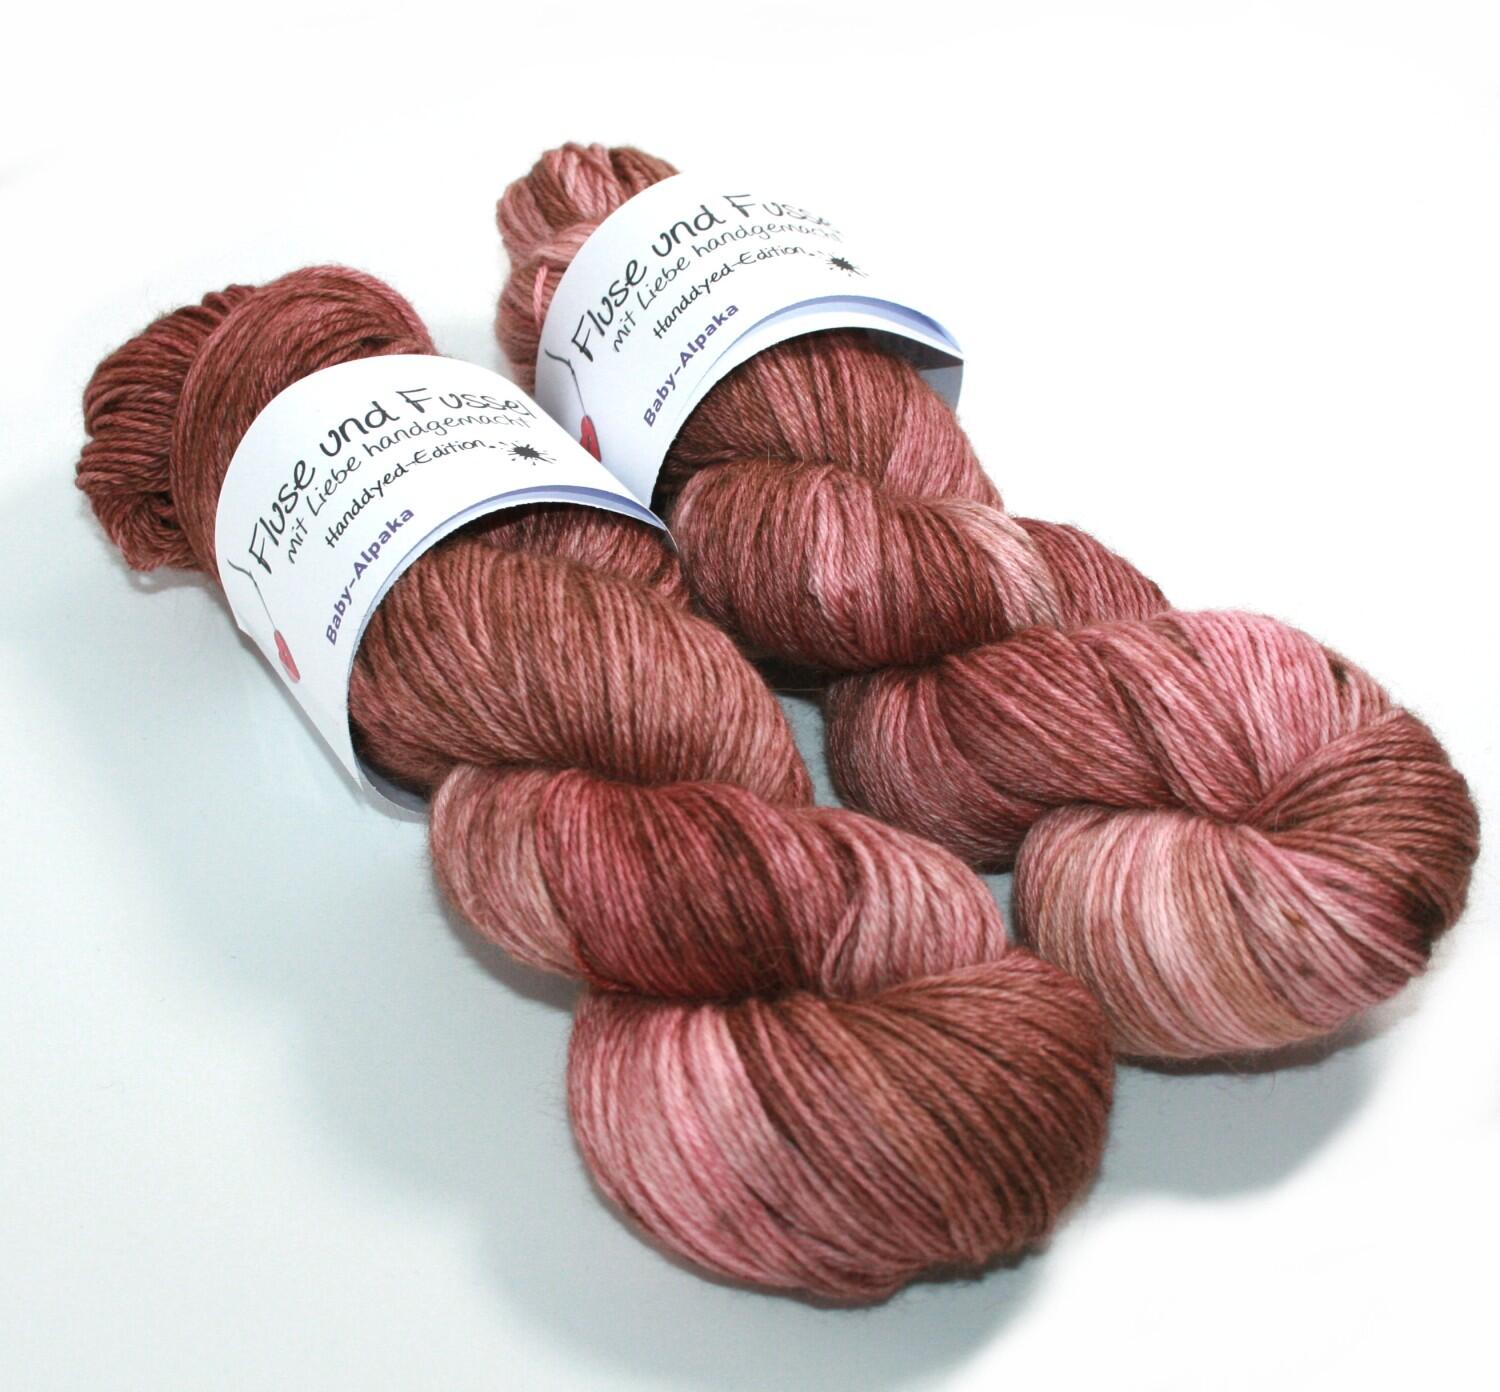 Fluse und Fussel Handdyed-Edition - Baby-Alpaka handgefärbt 100g Farbe: Rosébraun